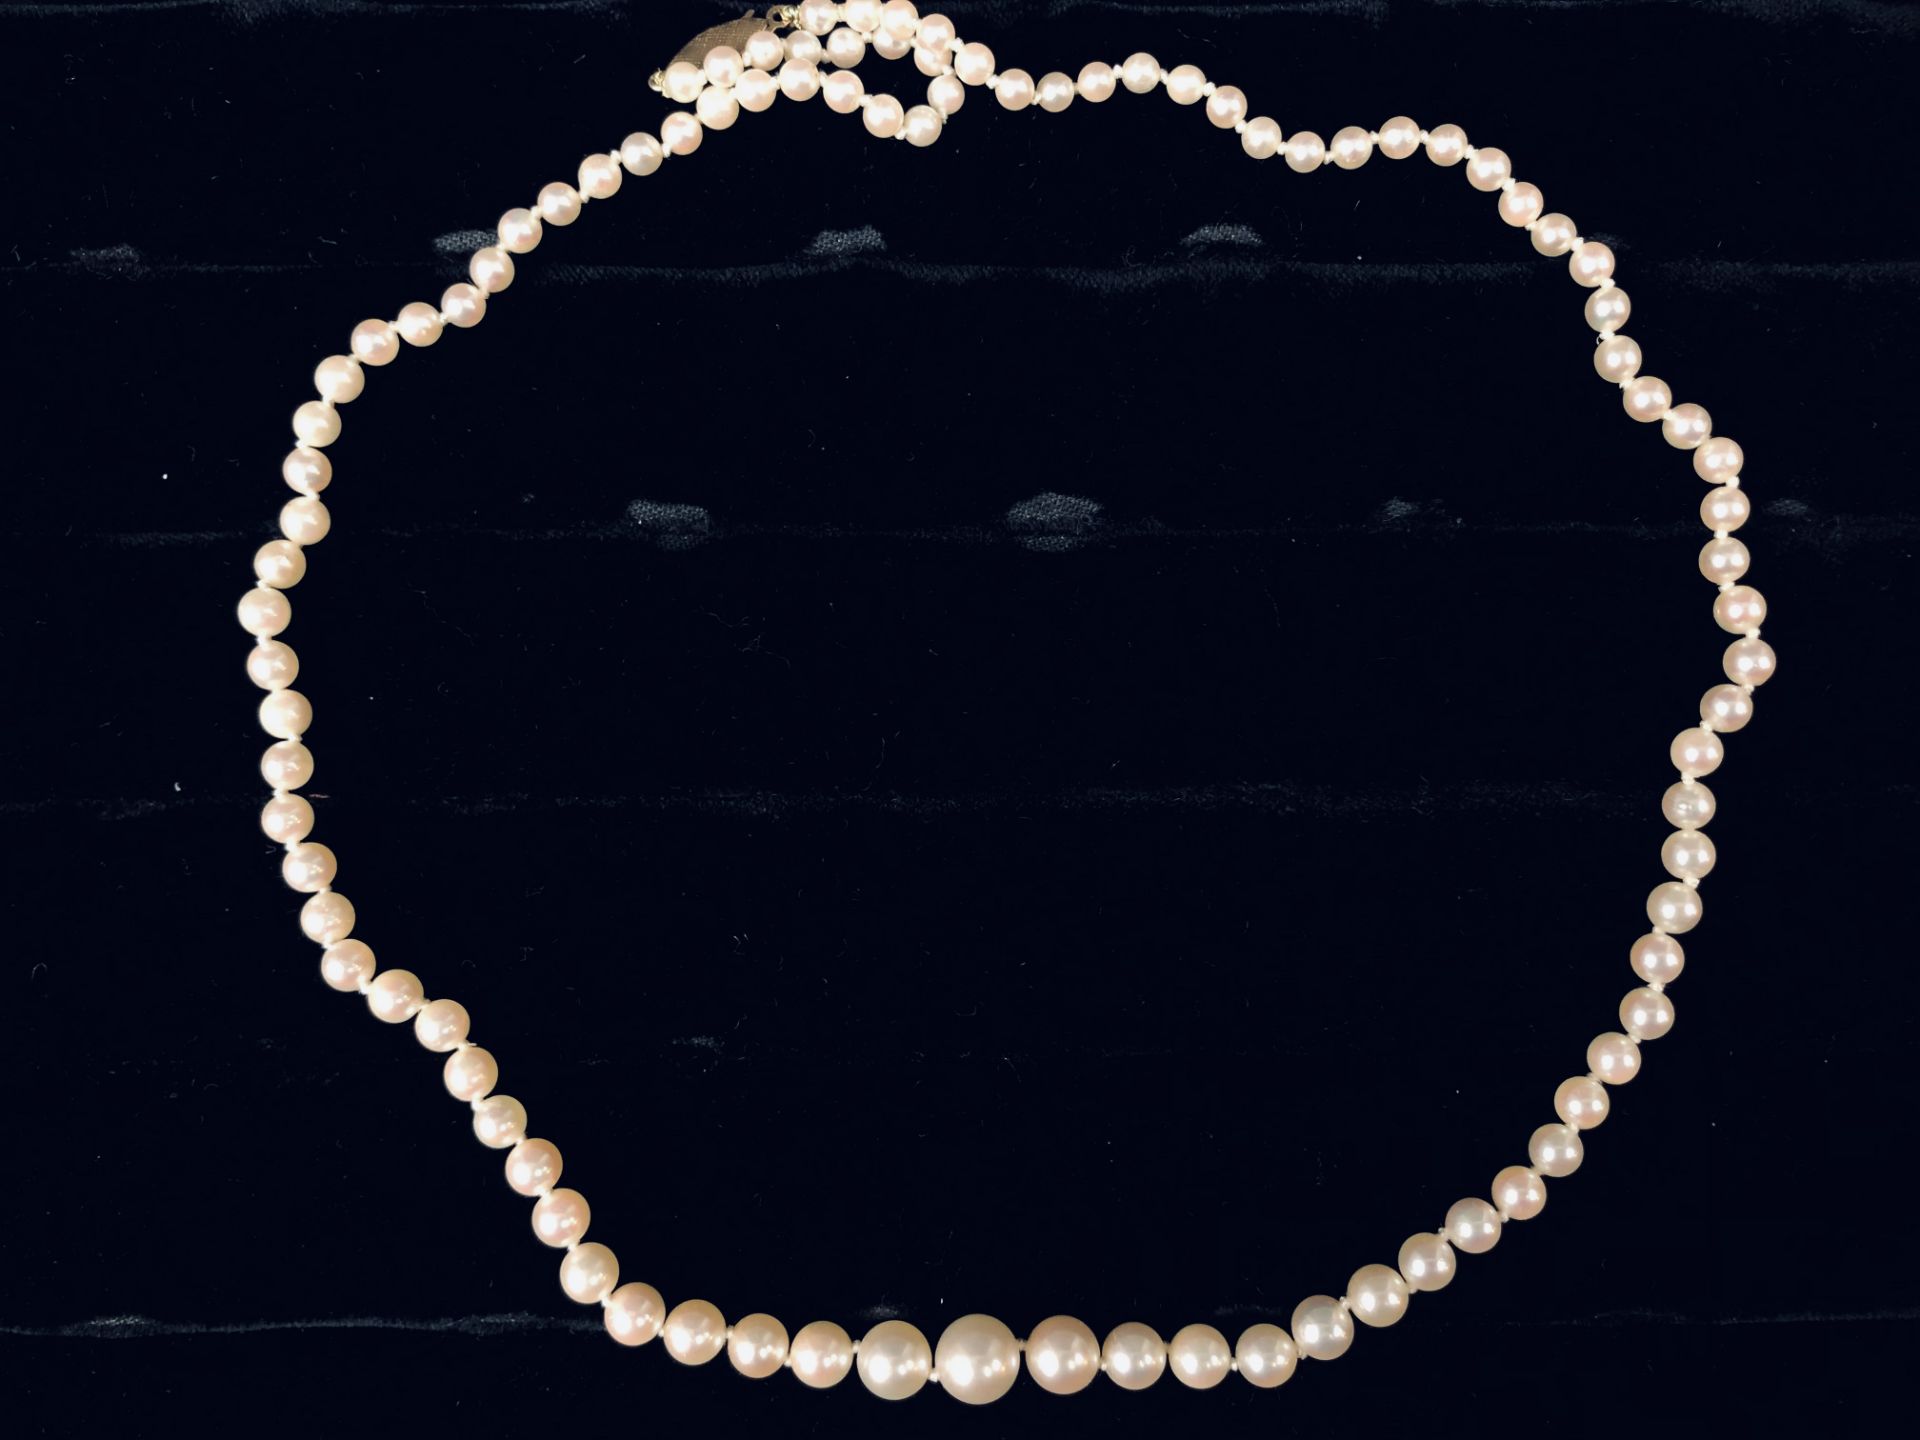 Collier de perles, fermoir ovale en or guilloché. Poids : 14,8 g. -